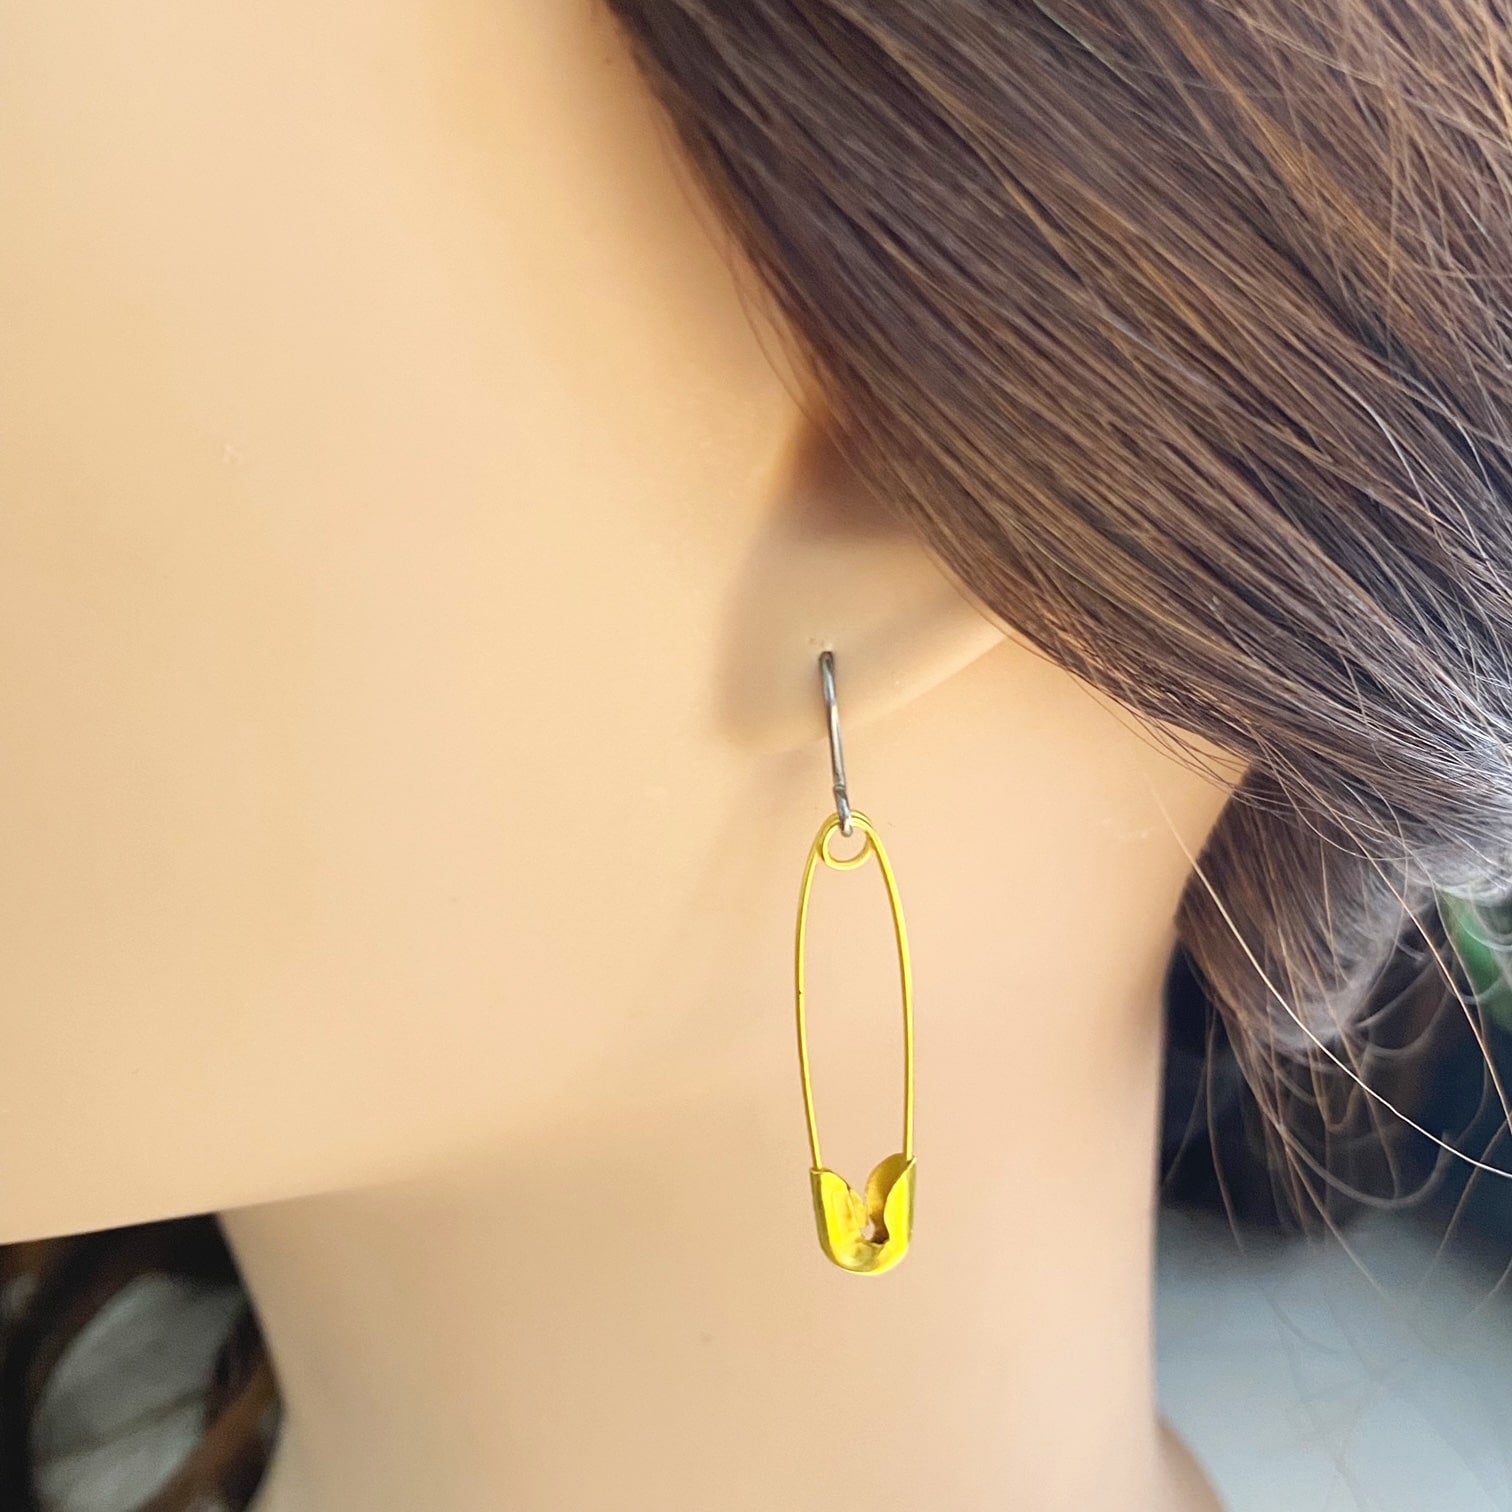 SafetyPin earrings